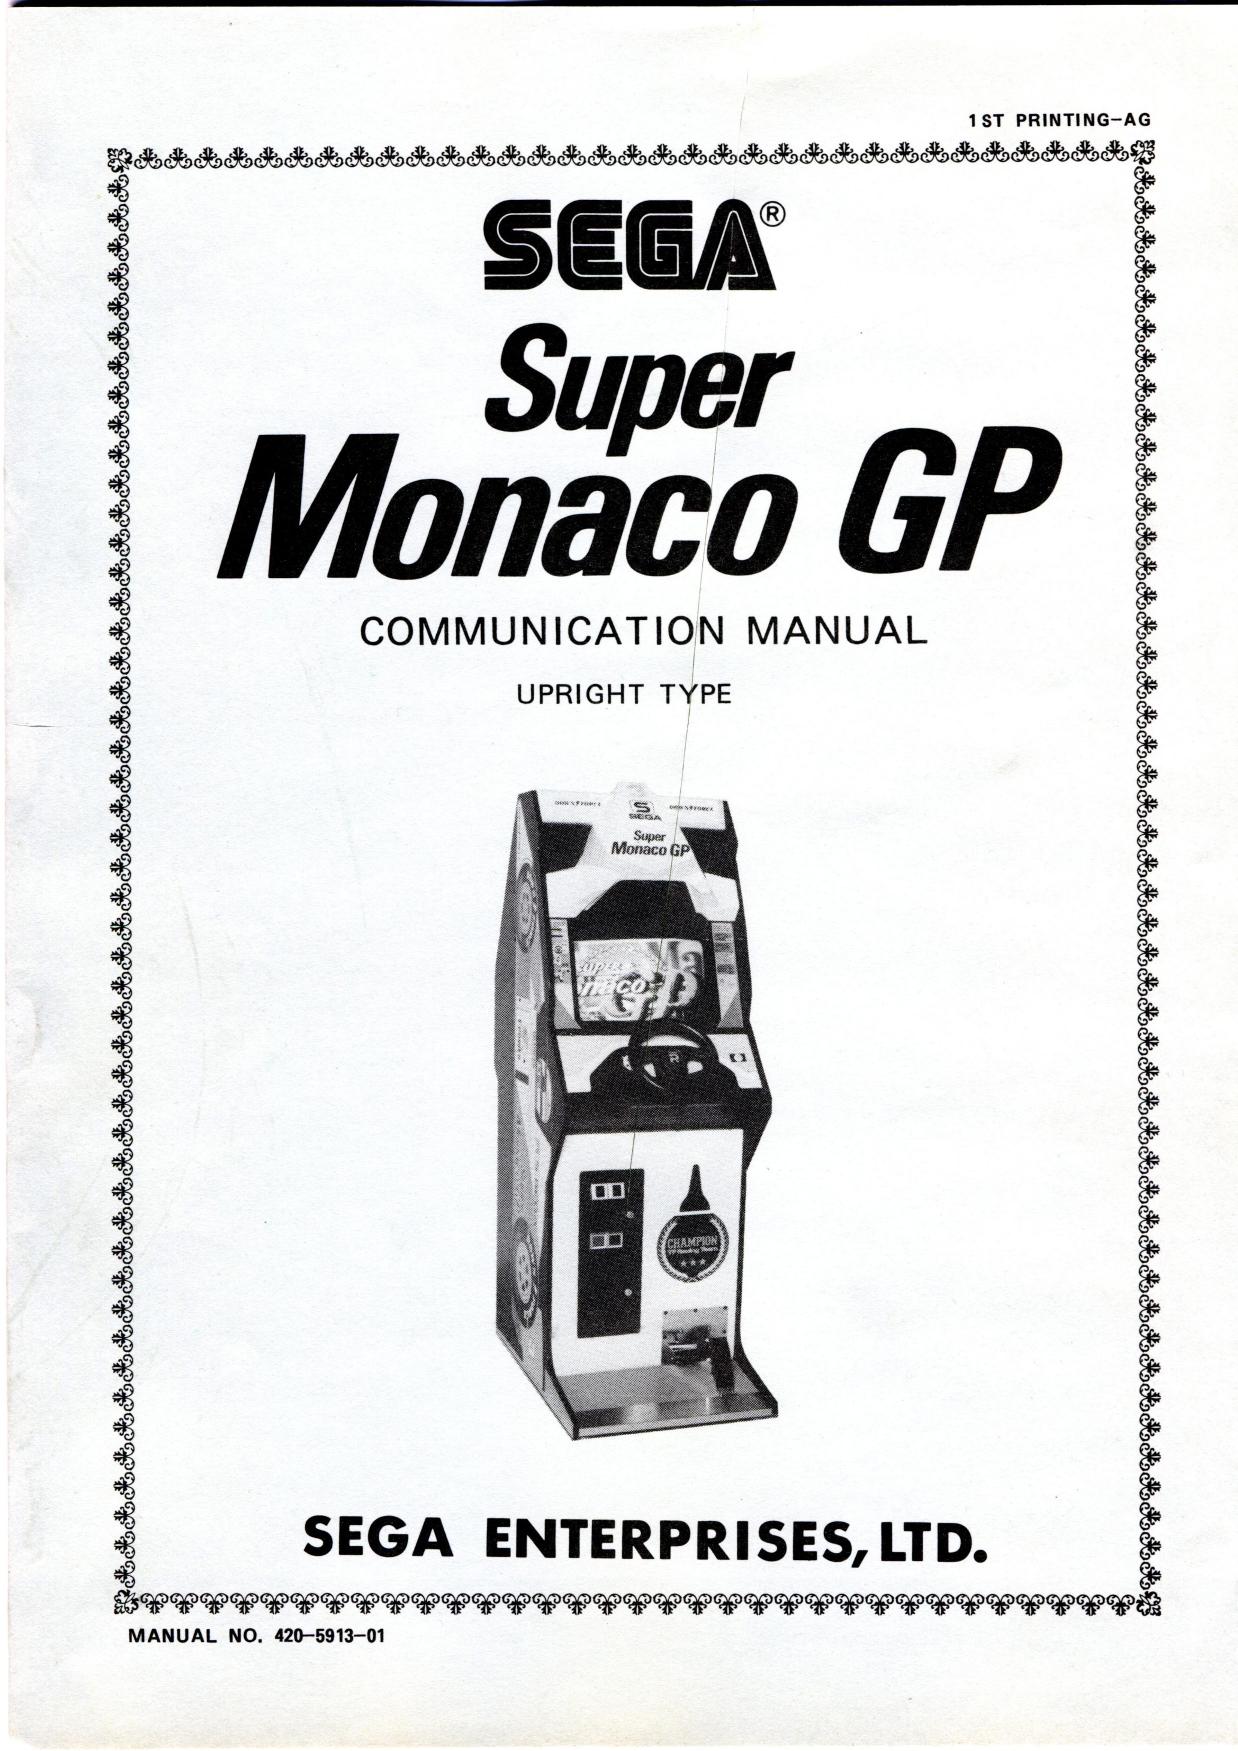 Super Monaco GP Communication Manual Upright Type